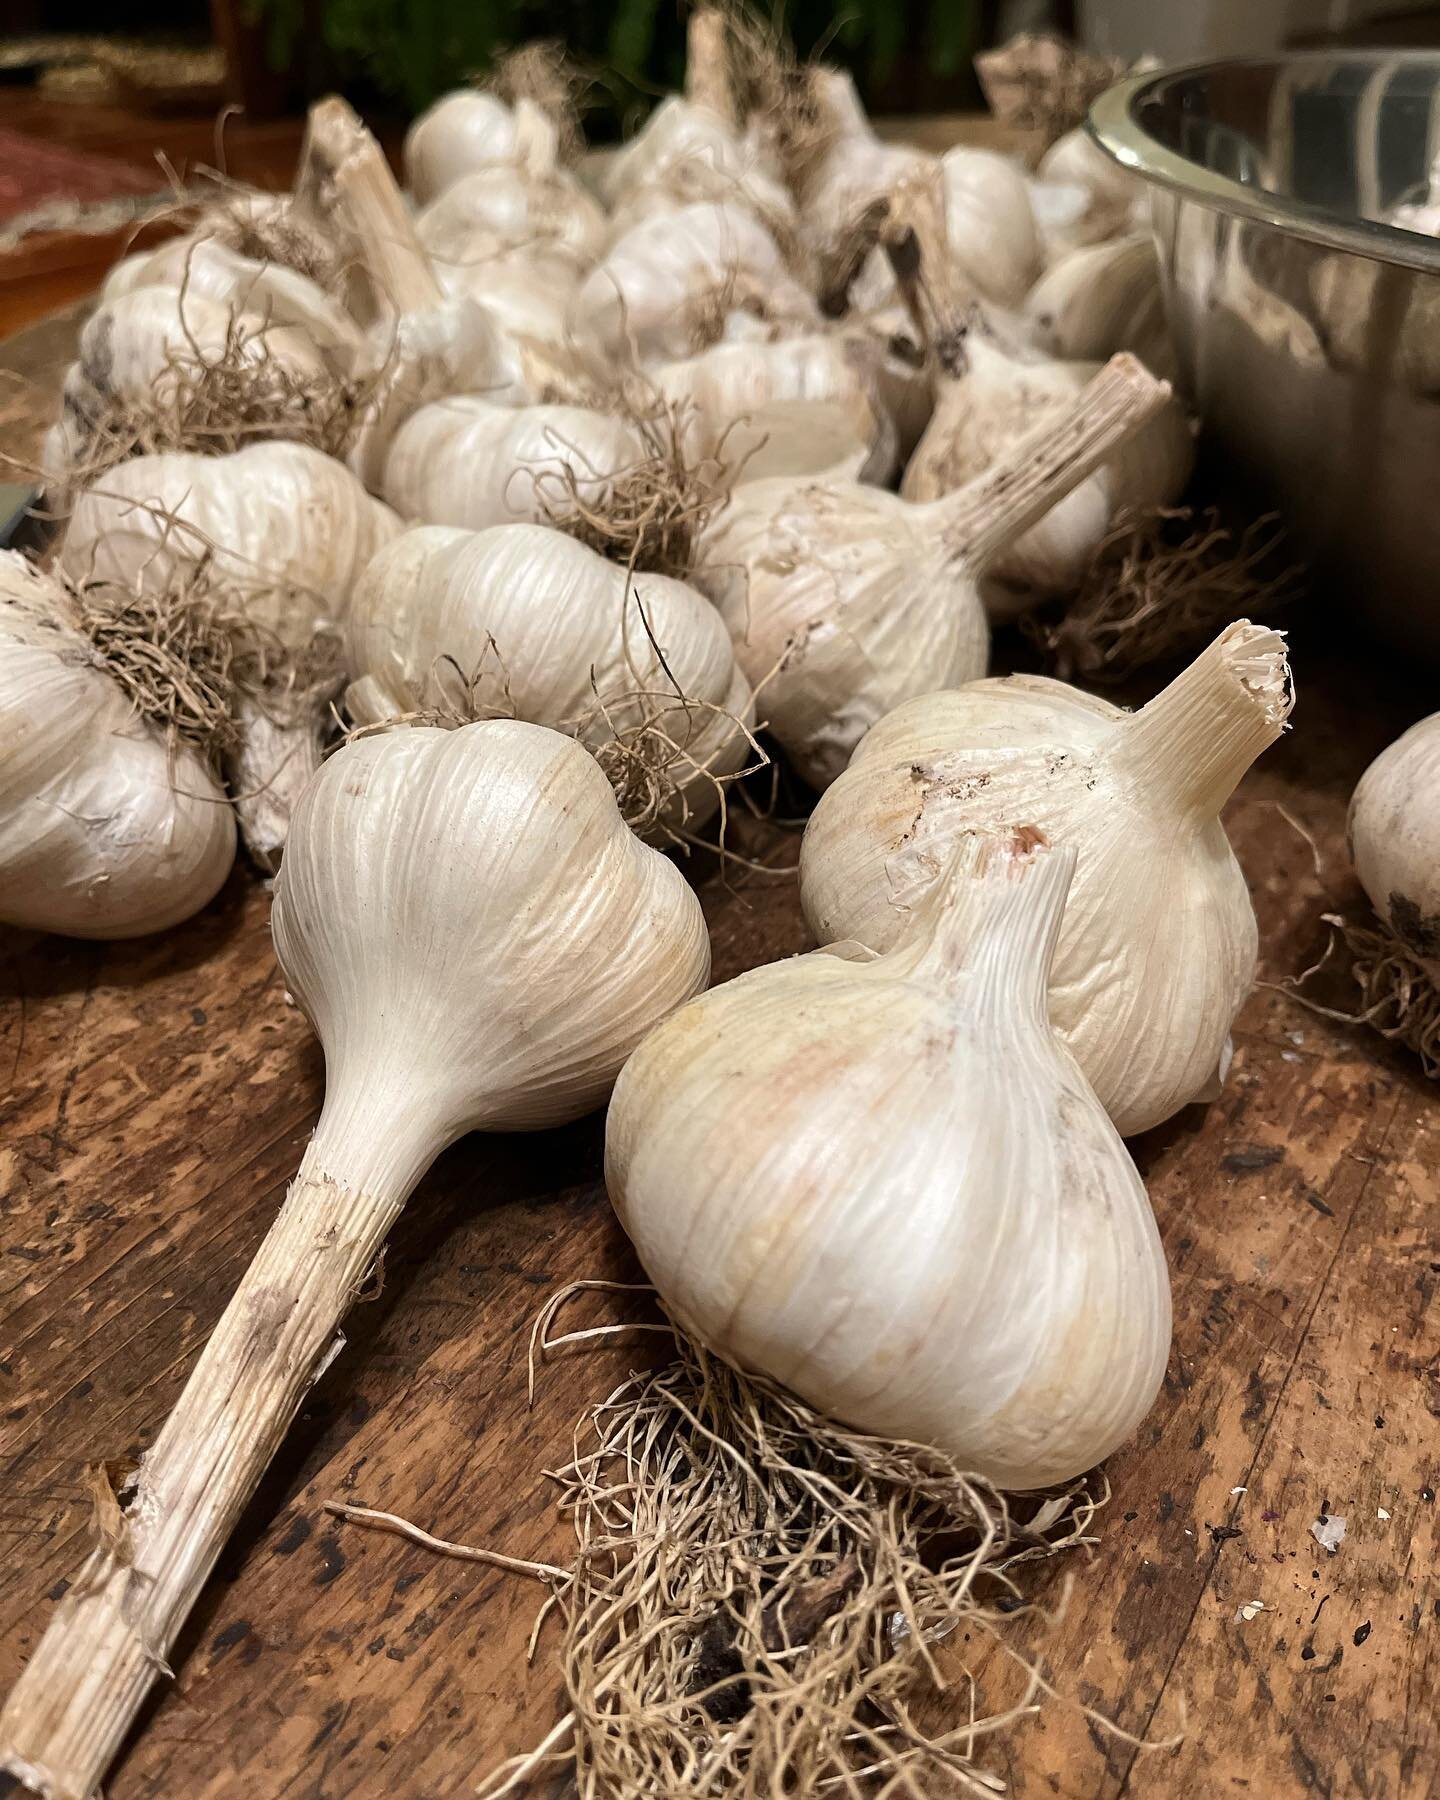 Amazing Garlic! Preparing to plant this beauty on the farm